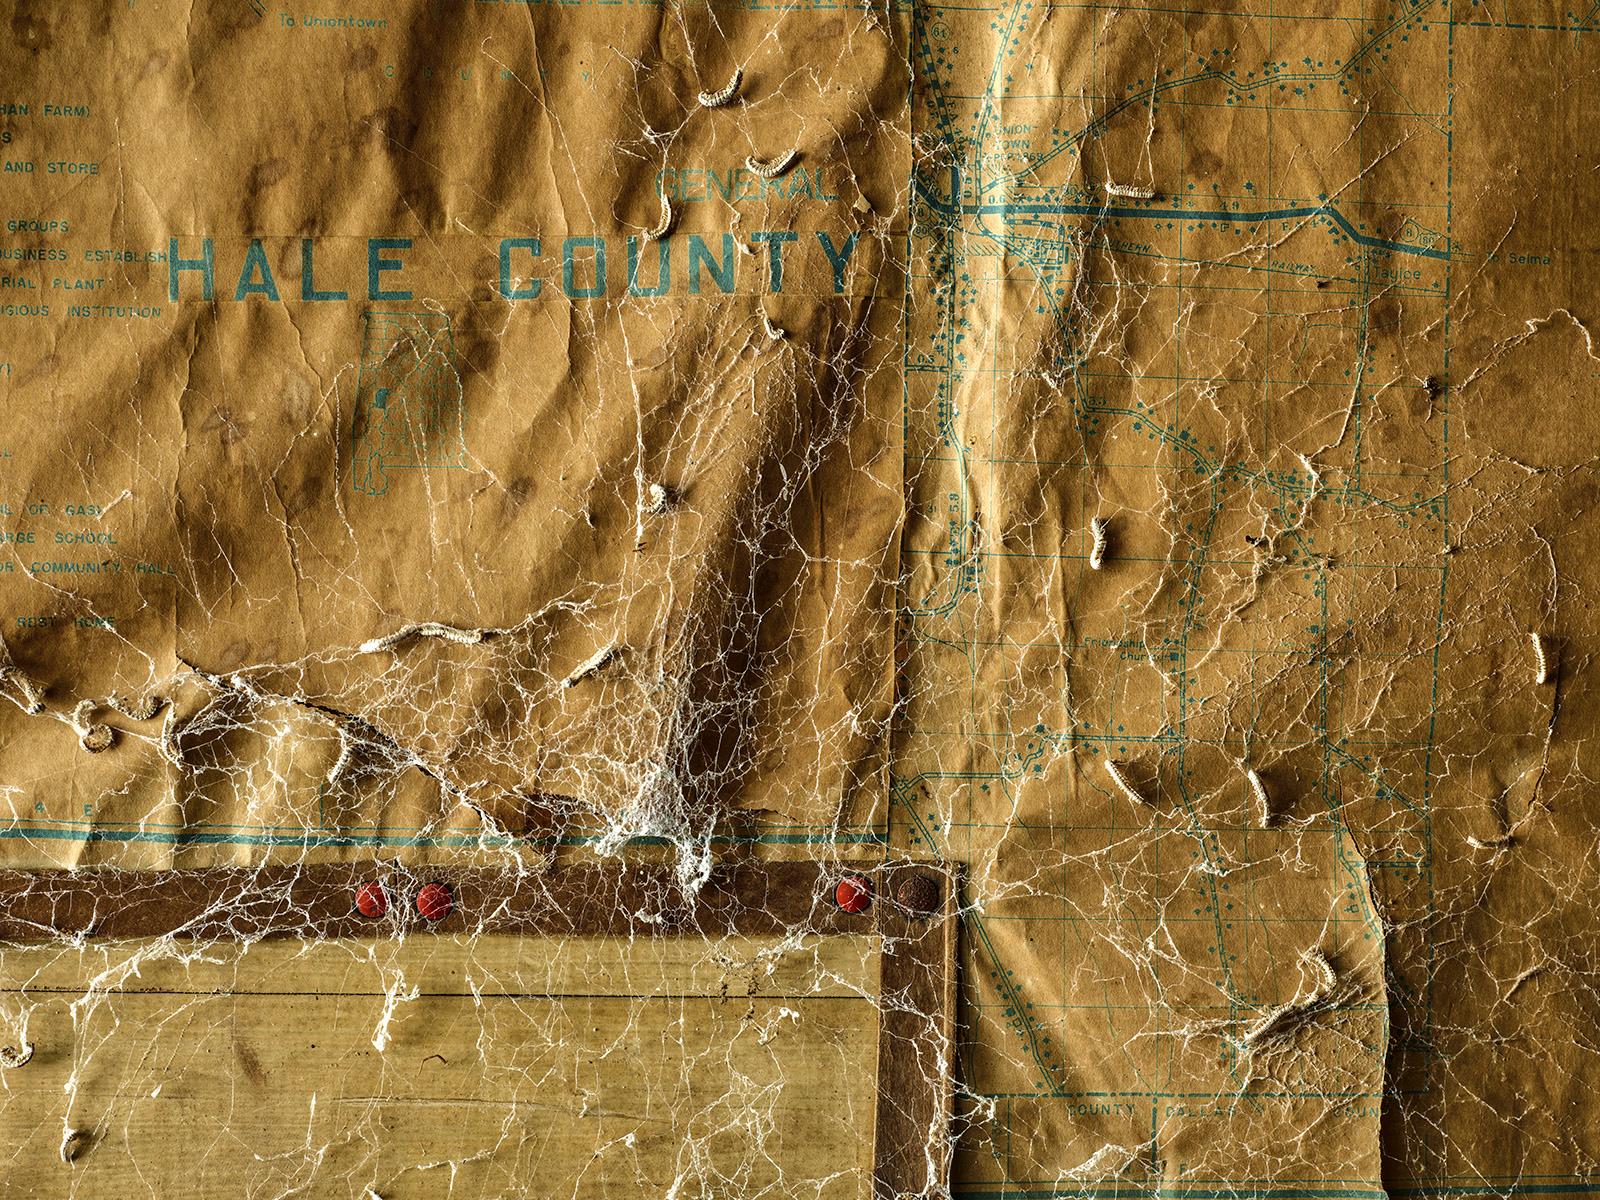 Andrew Moore Landscape Photograph - Hale County Map, Marion, AL